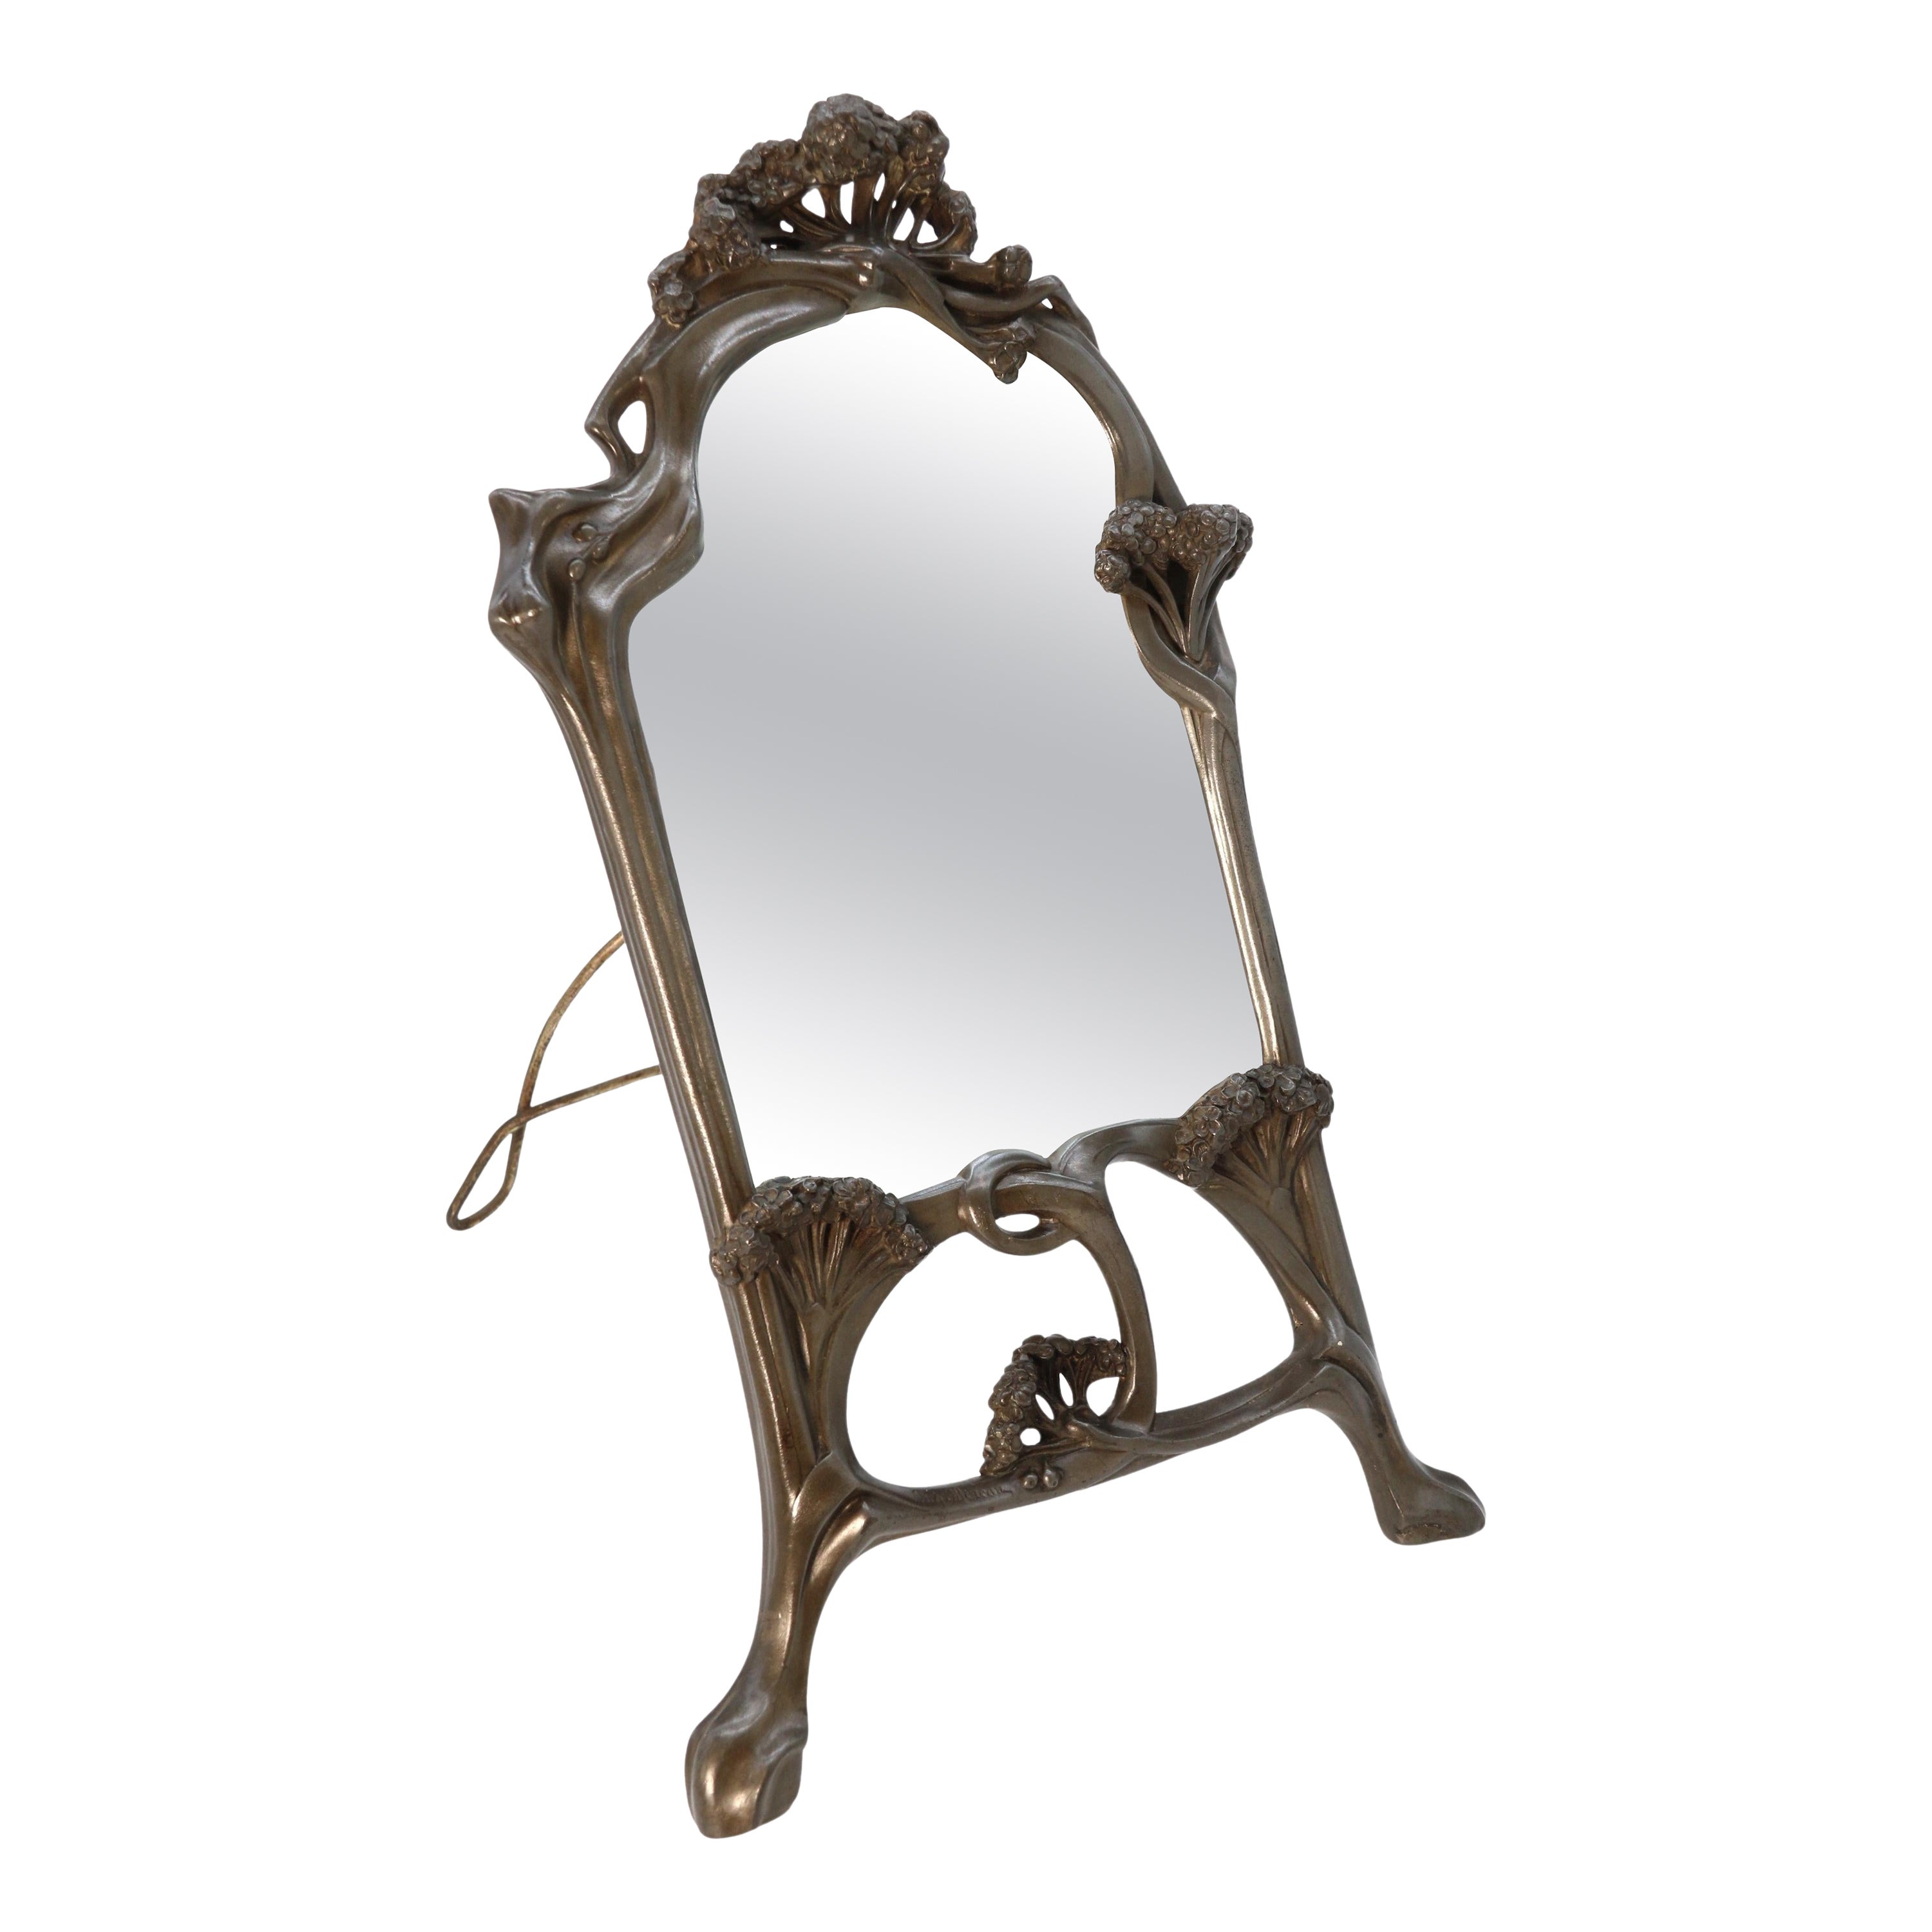 An Art Nouveau mirror by the French 19th century sculptor Louis Auguste Moreau. For Sale